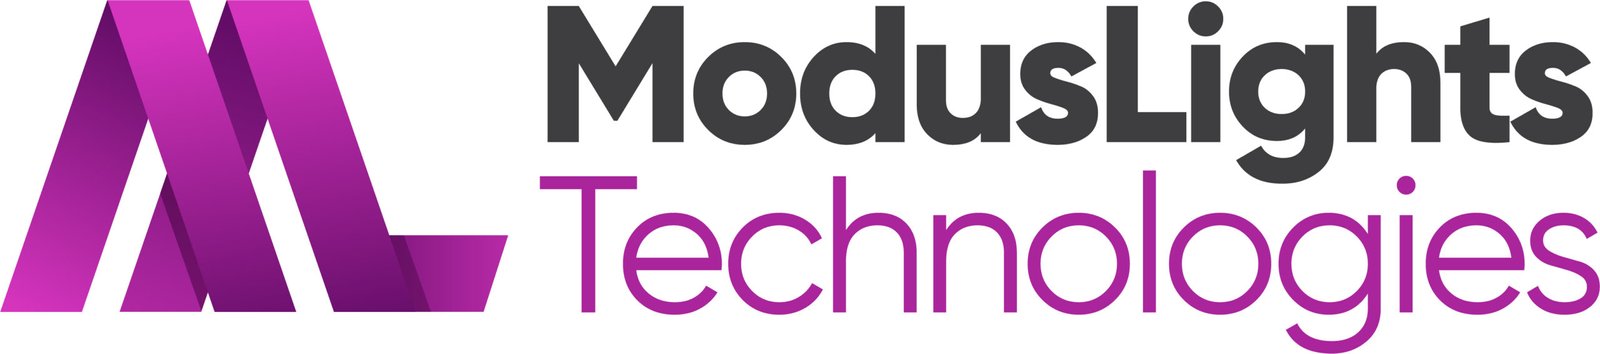 modus-lights technologies